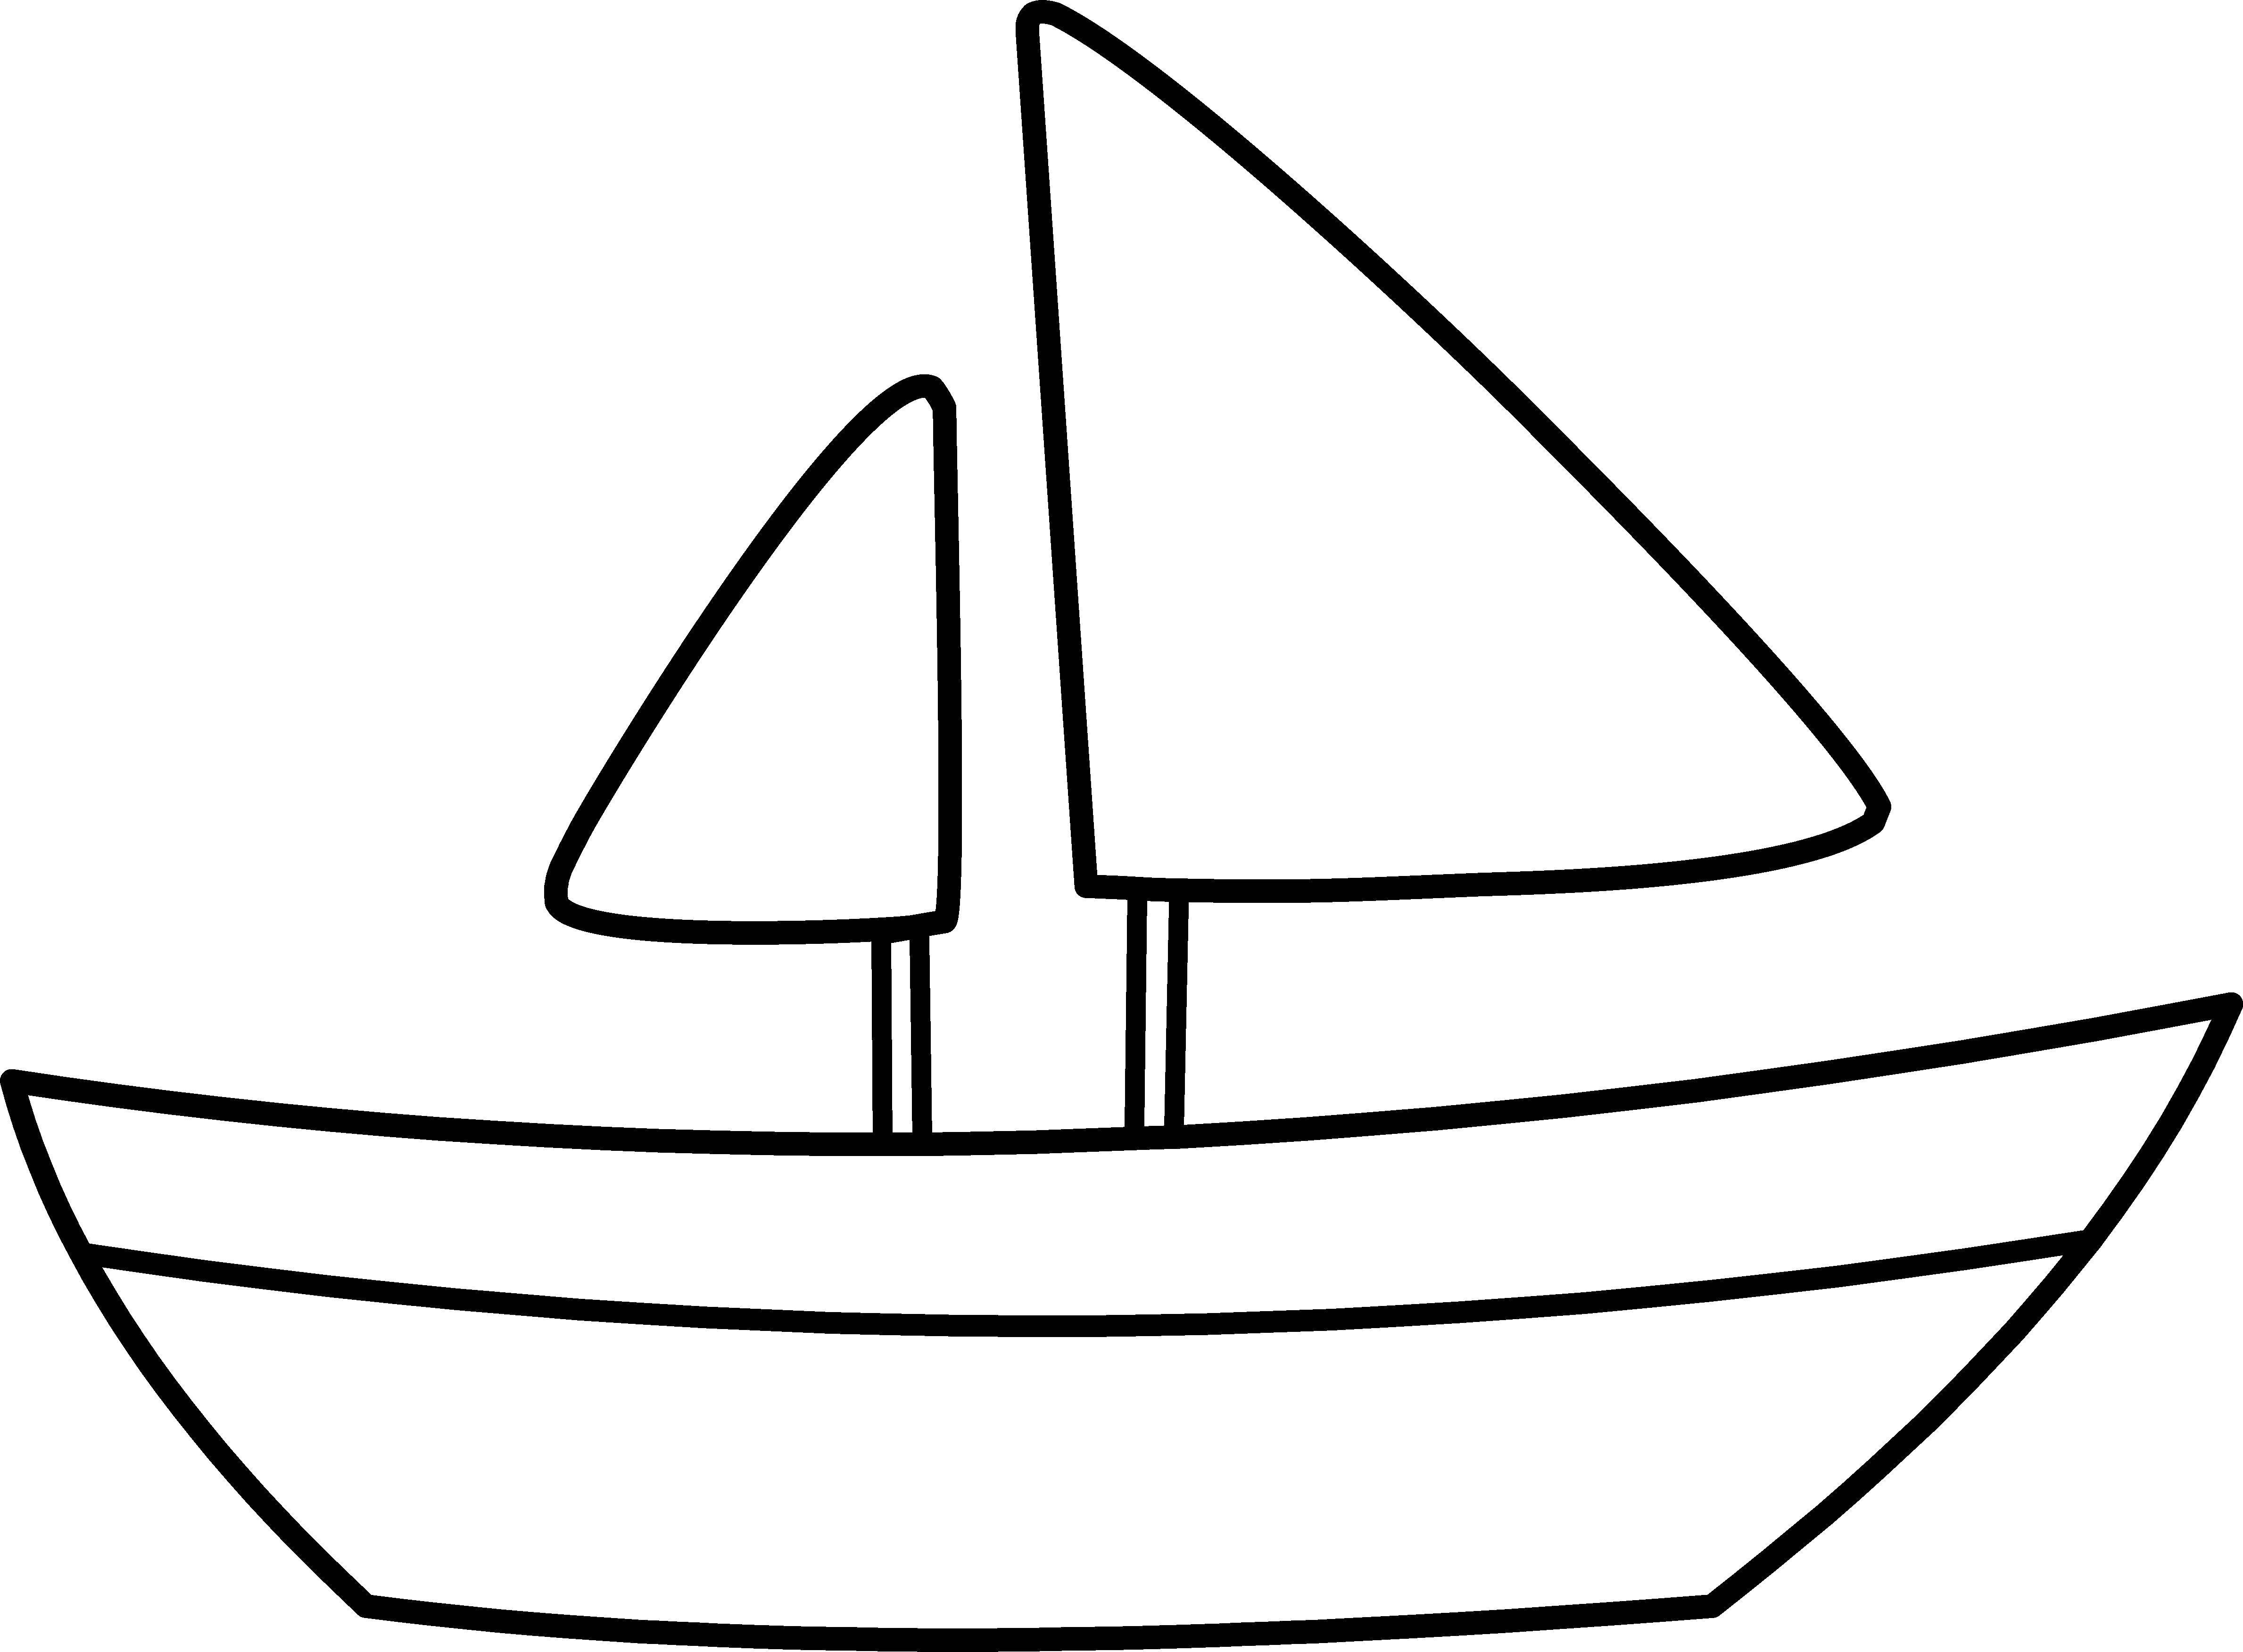 Coloring A small boat. Category ships. Tags:  ships, boats, sails.